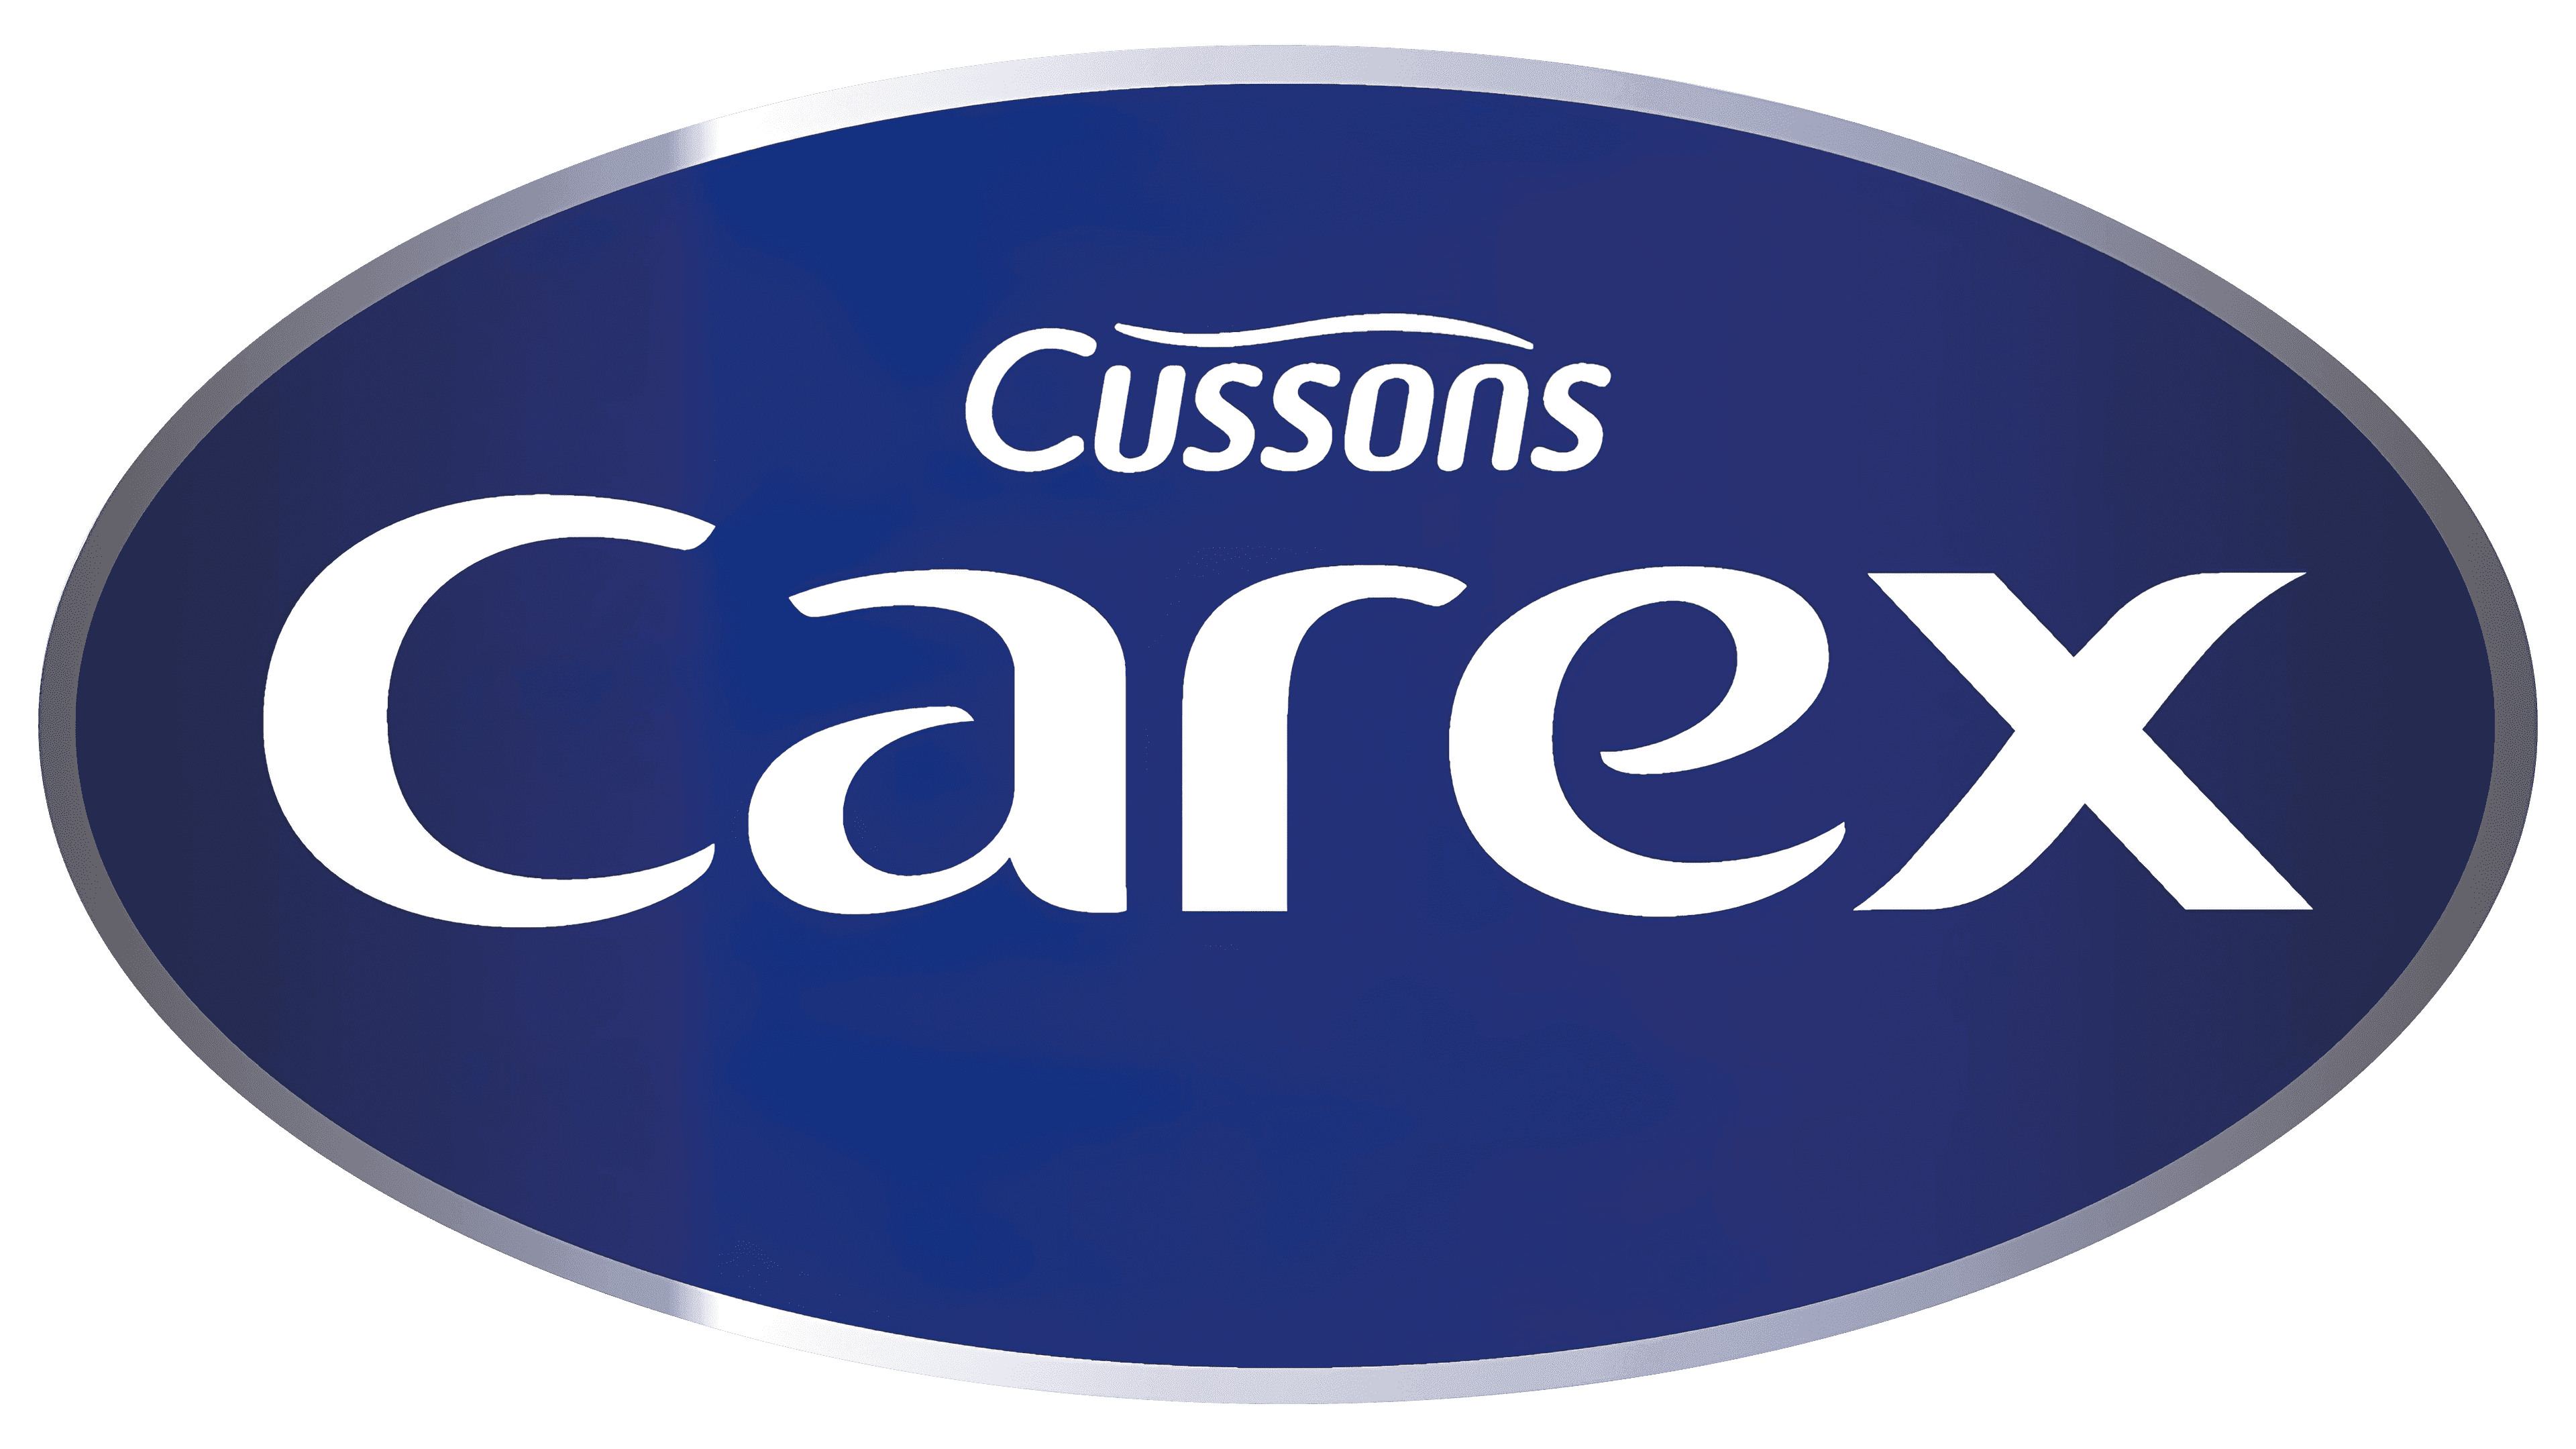 Carex Cusson Logo